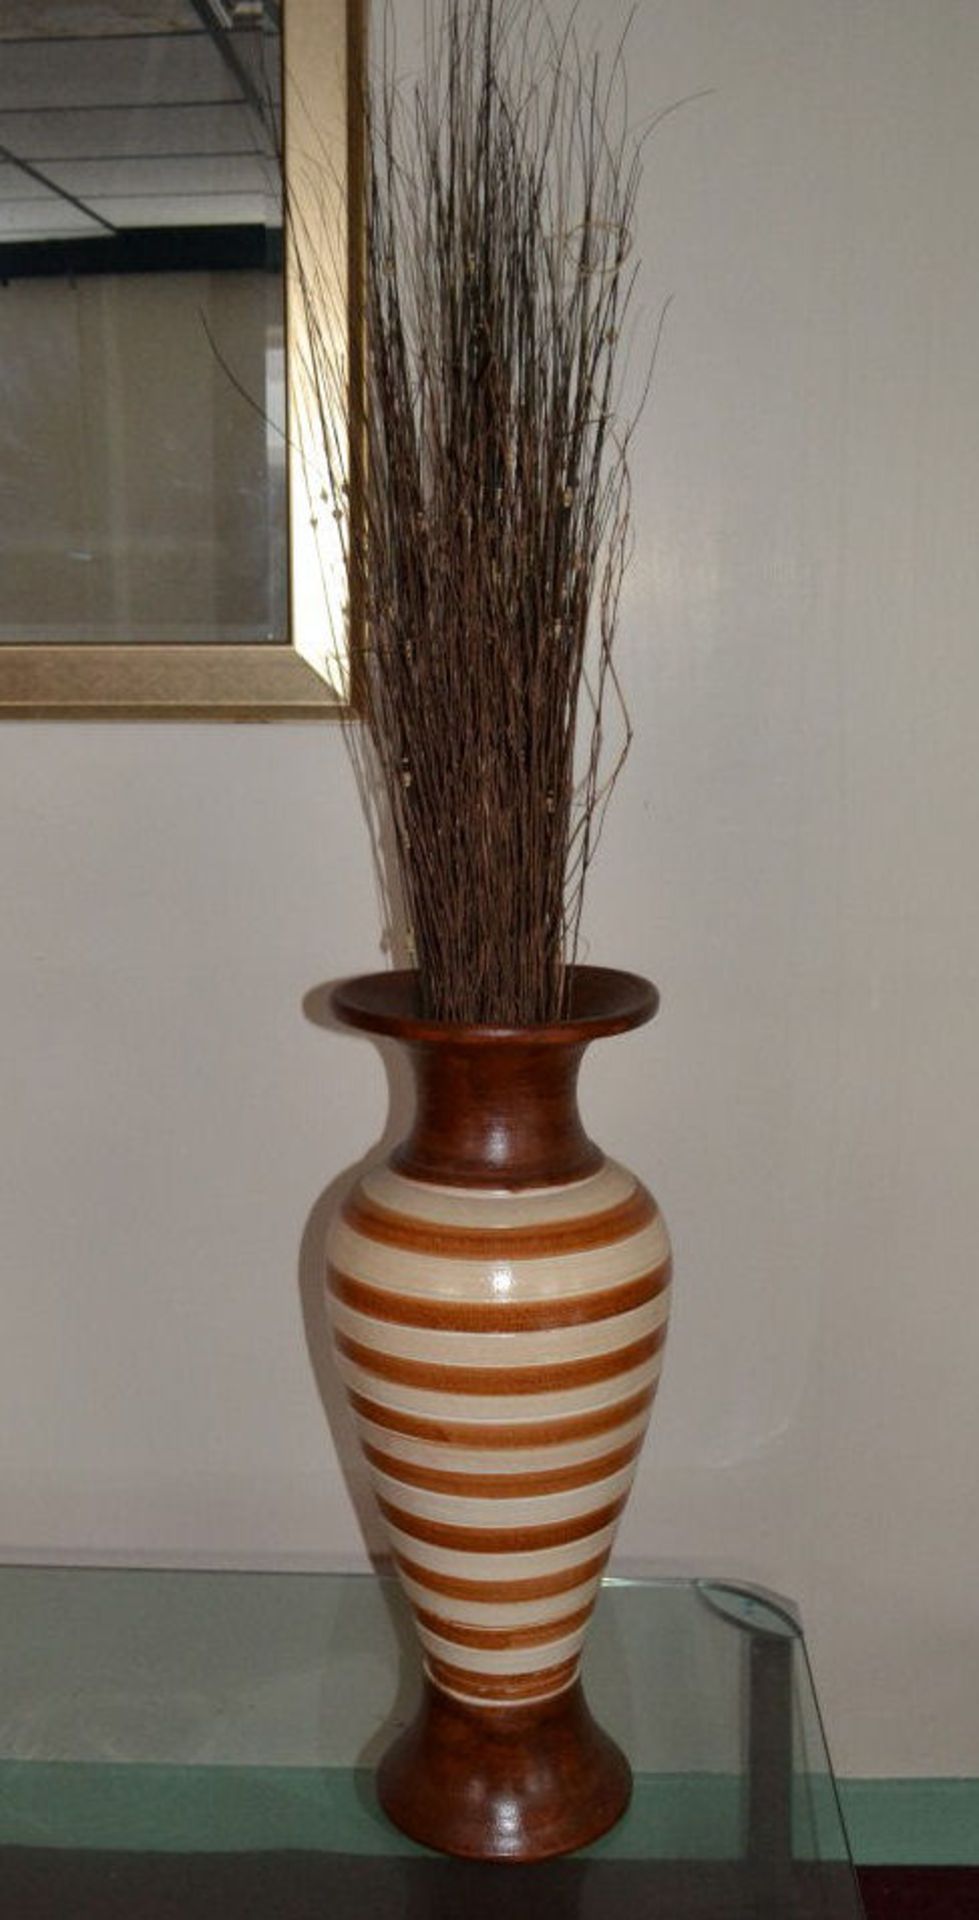 5 Assorted Decorative Vases - See Description For Details - Image 11 of 19